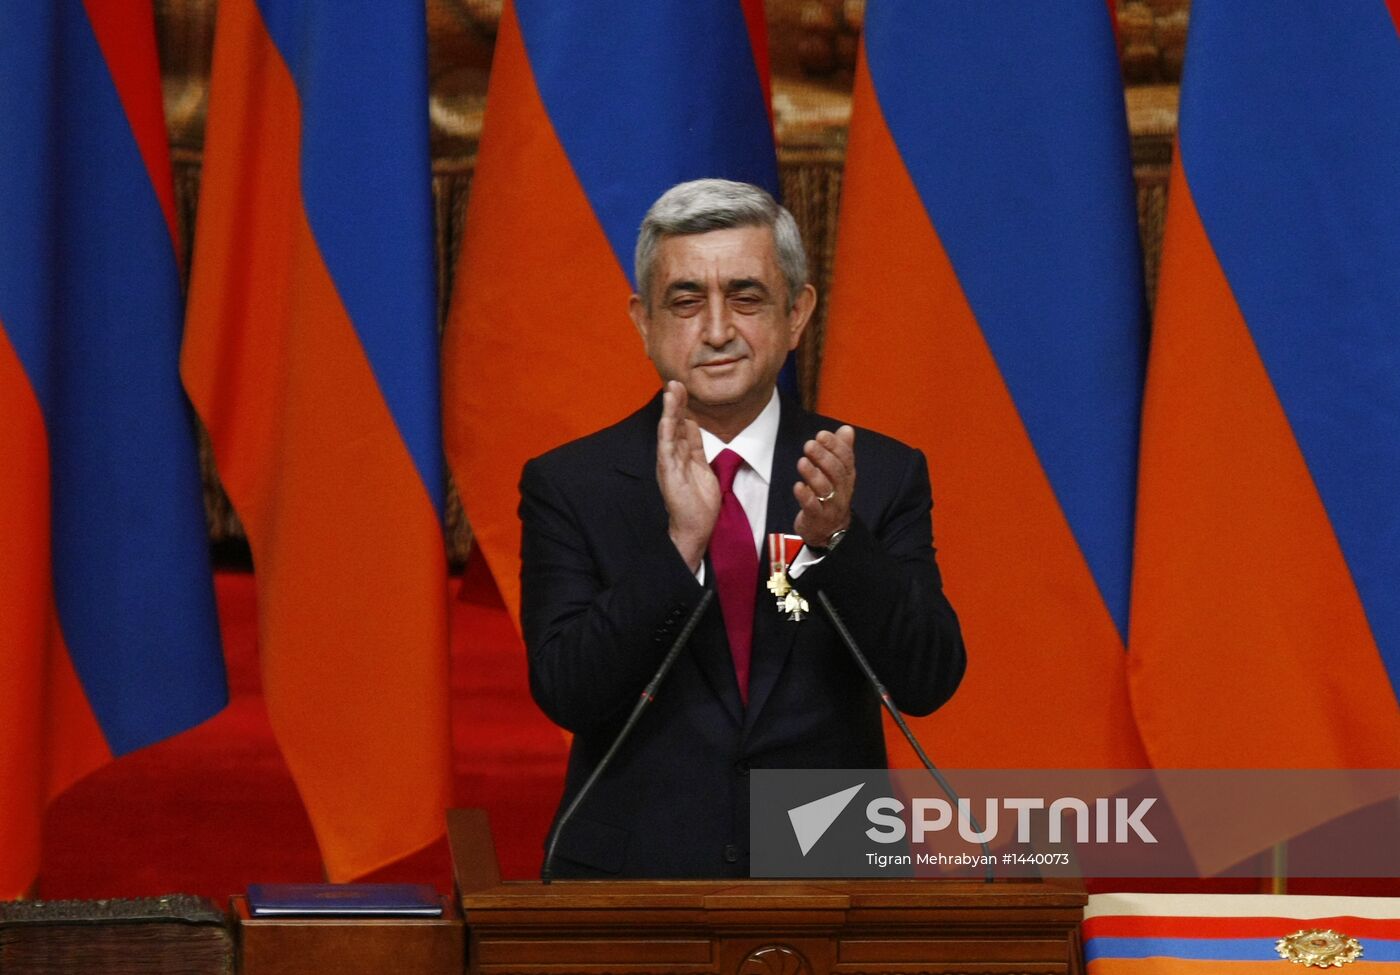 Serzh Sargsyan sworn in as President of Armenia